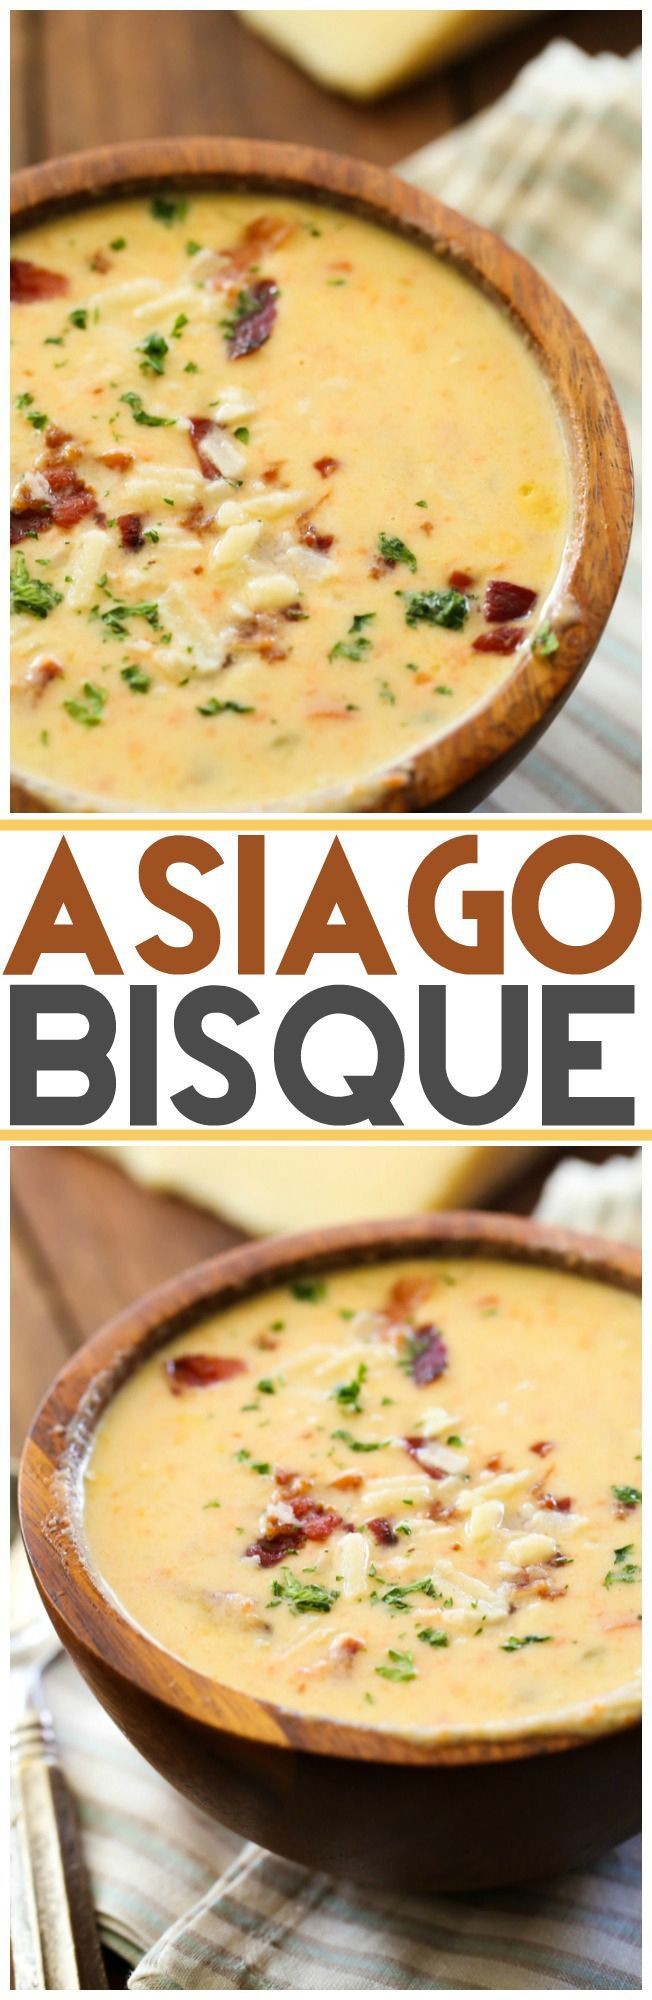 Asiago Bisque... This soup is unbelievably delicio...